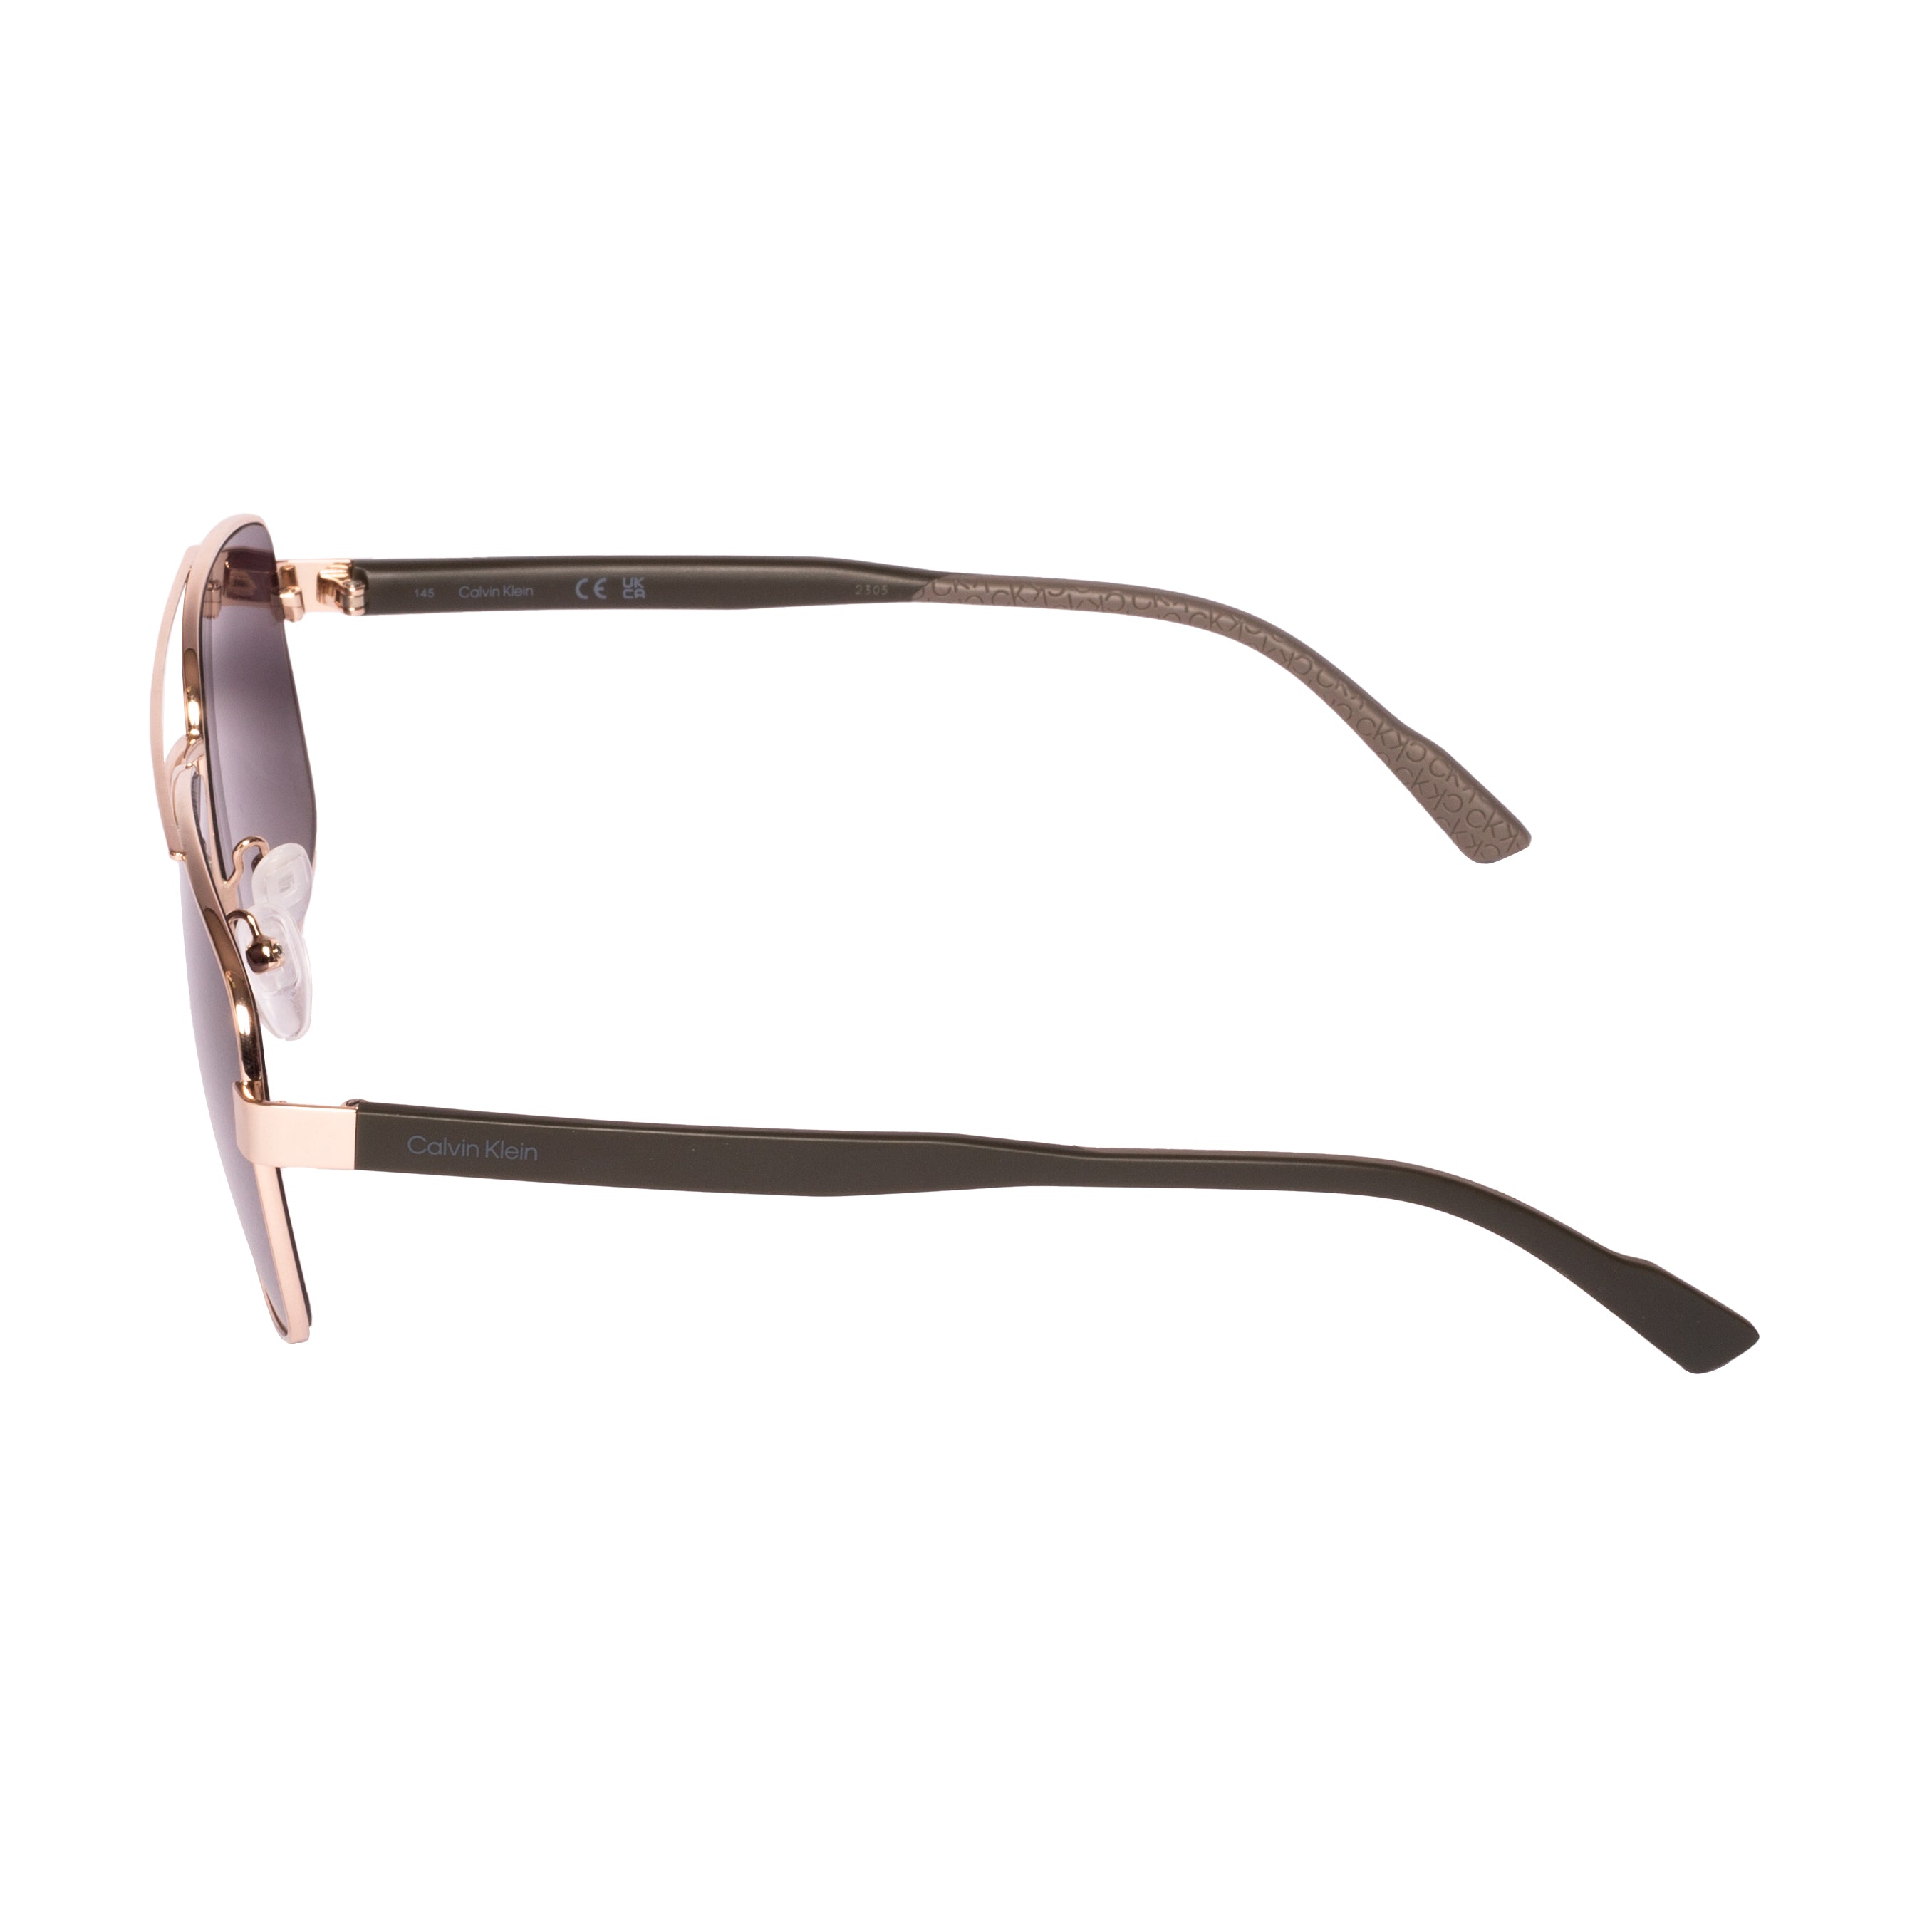 Calvin Klein CK-CK 22114-60-320 Sunglasses - Premium Sunglasses from Calvin Klein - Just Rs. 9900! Shop now at Laxmi Opticians